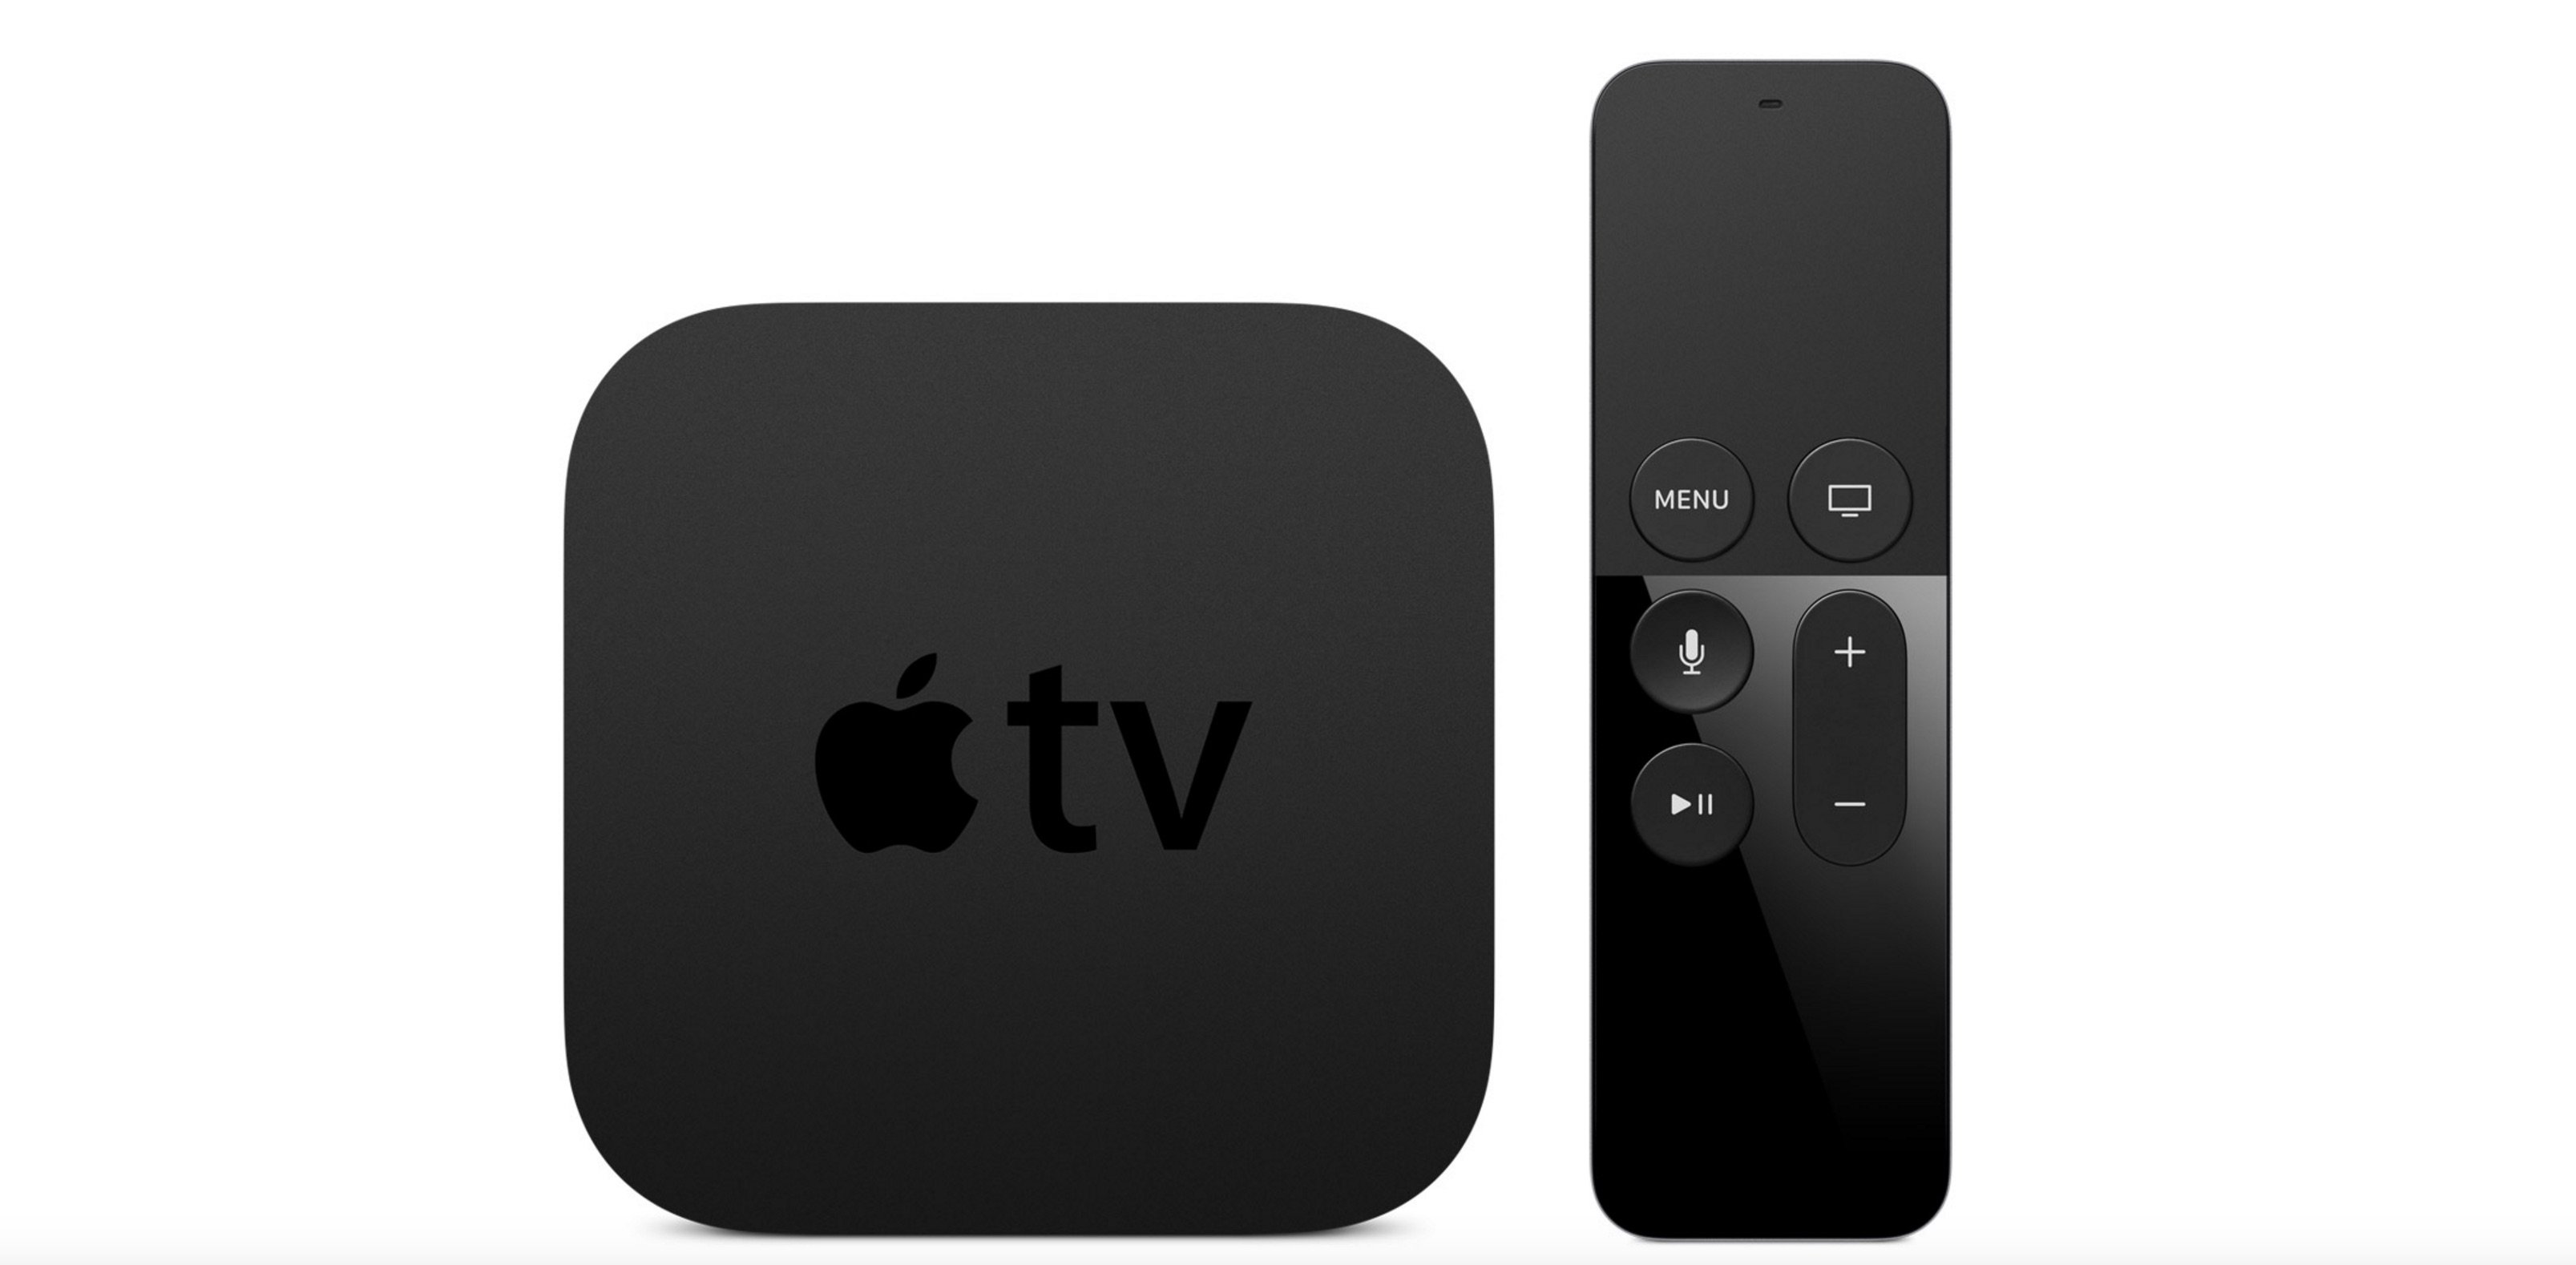 Apple Remote App dank Update mit Apple TV 4 kompatibel 6